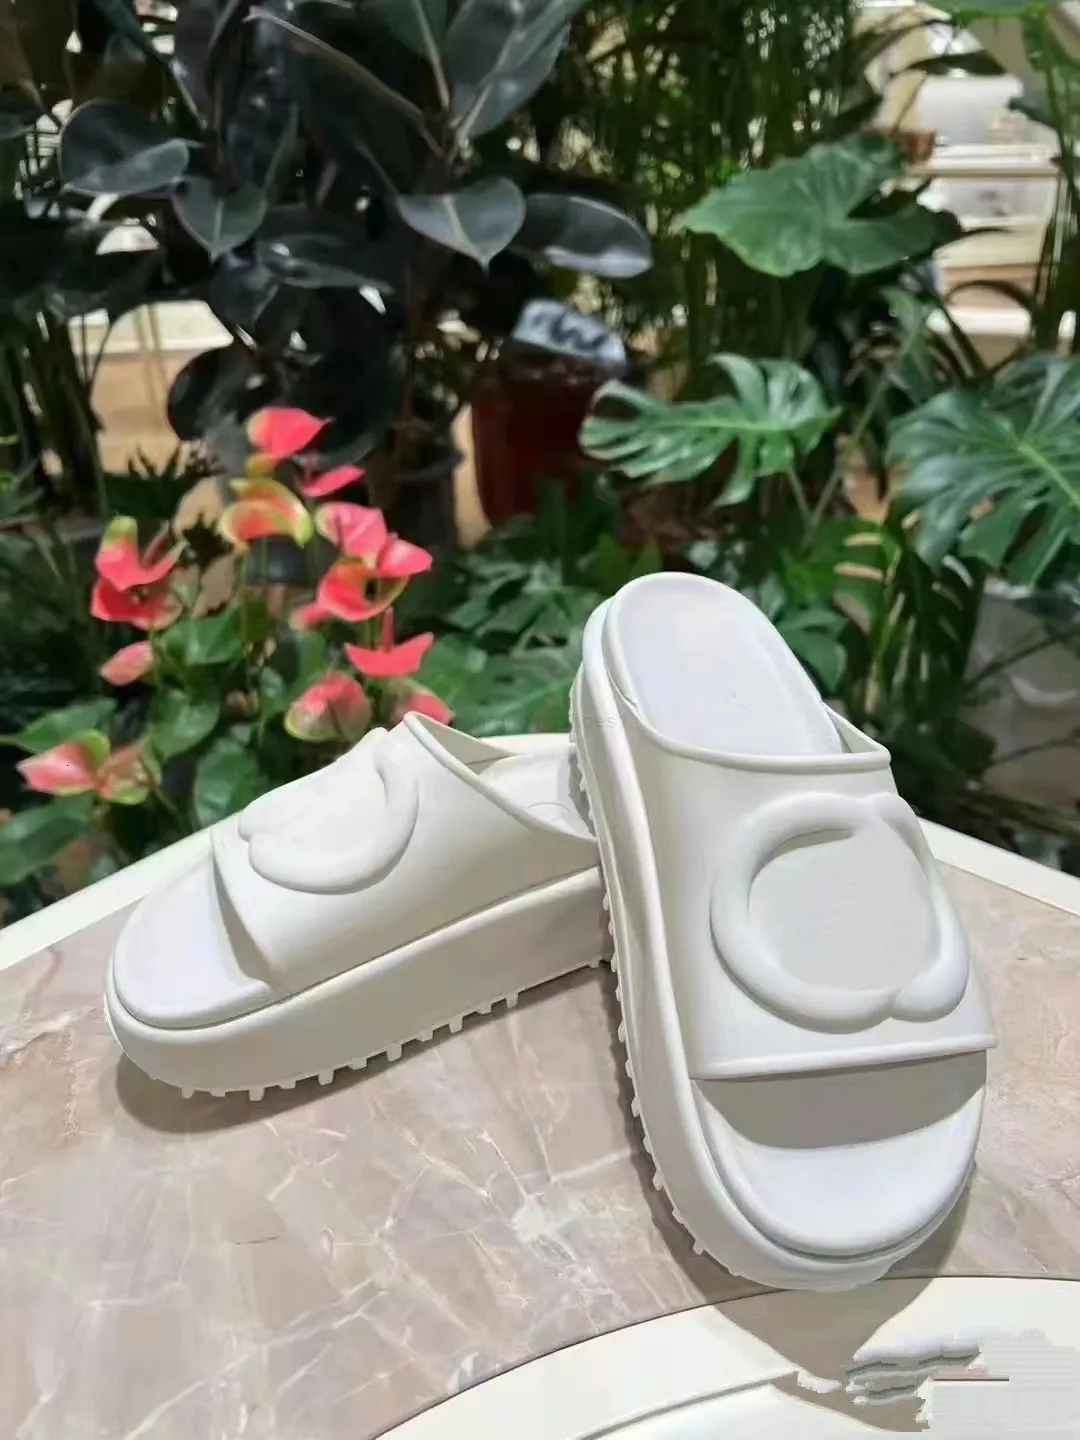 Paris Luxury Waterproof G Rubber Slipper Sandals Women's Designers Thick-soled Slide Slippers Fashion Outdoor Beach Summer Loafers Flip Flop